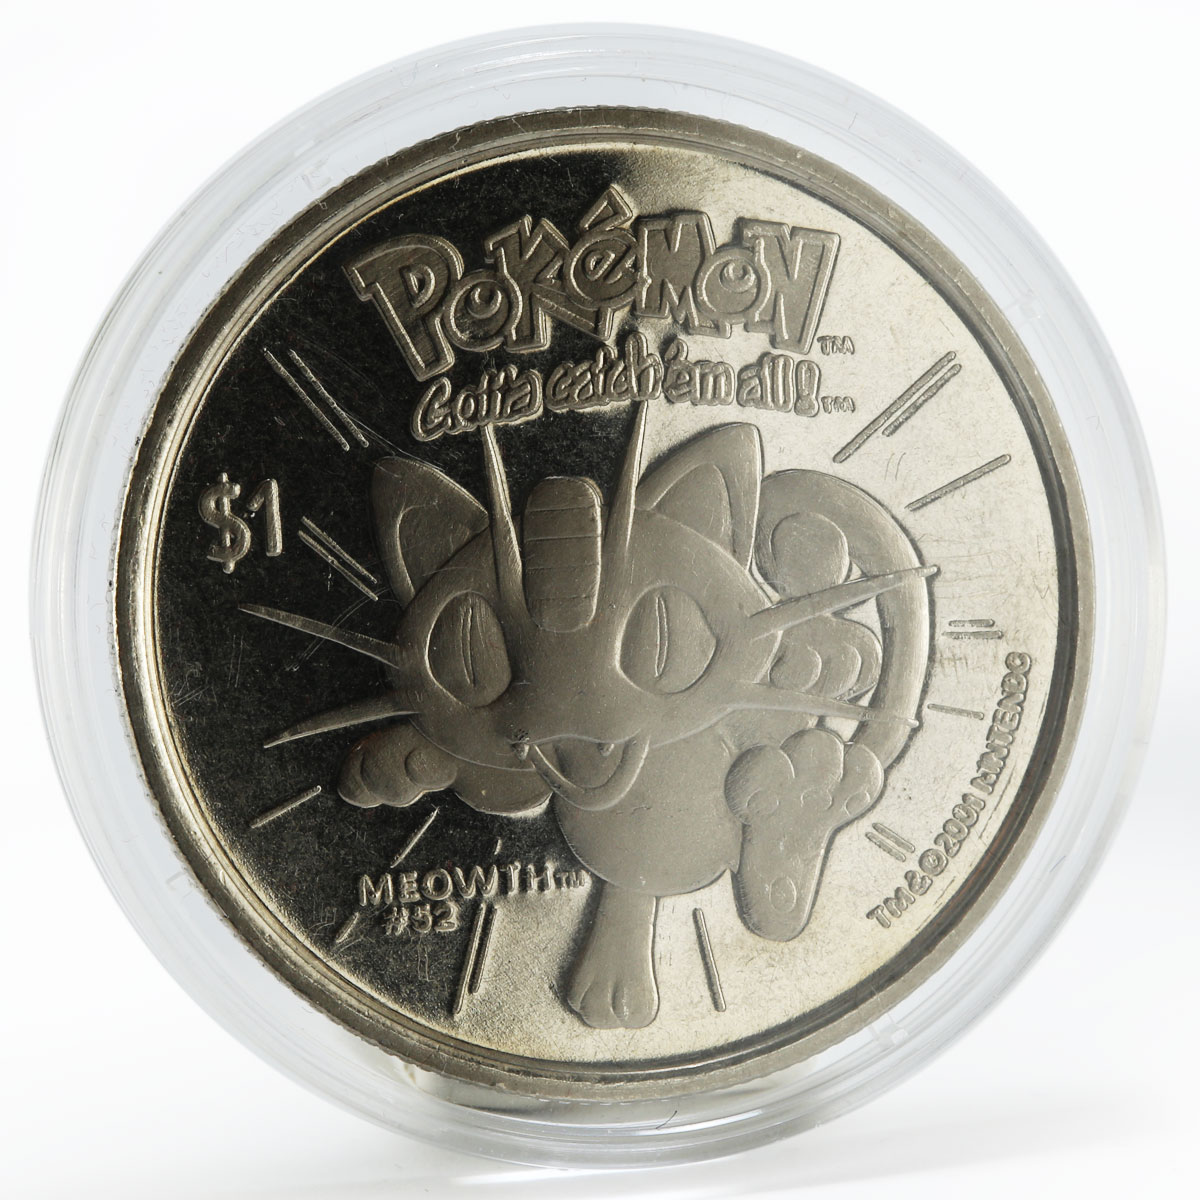 Niue 1 dollar Pokemon Meowth copper-nickel coin 2001